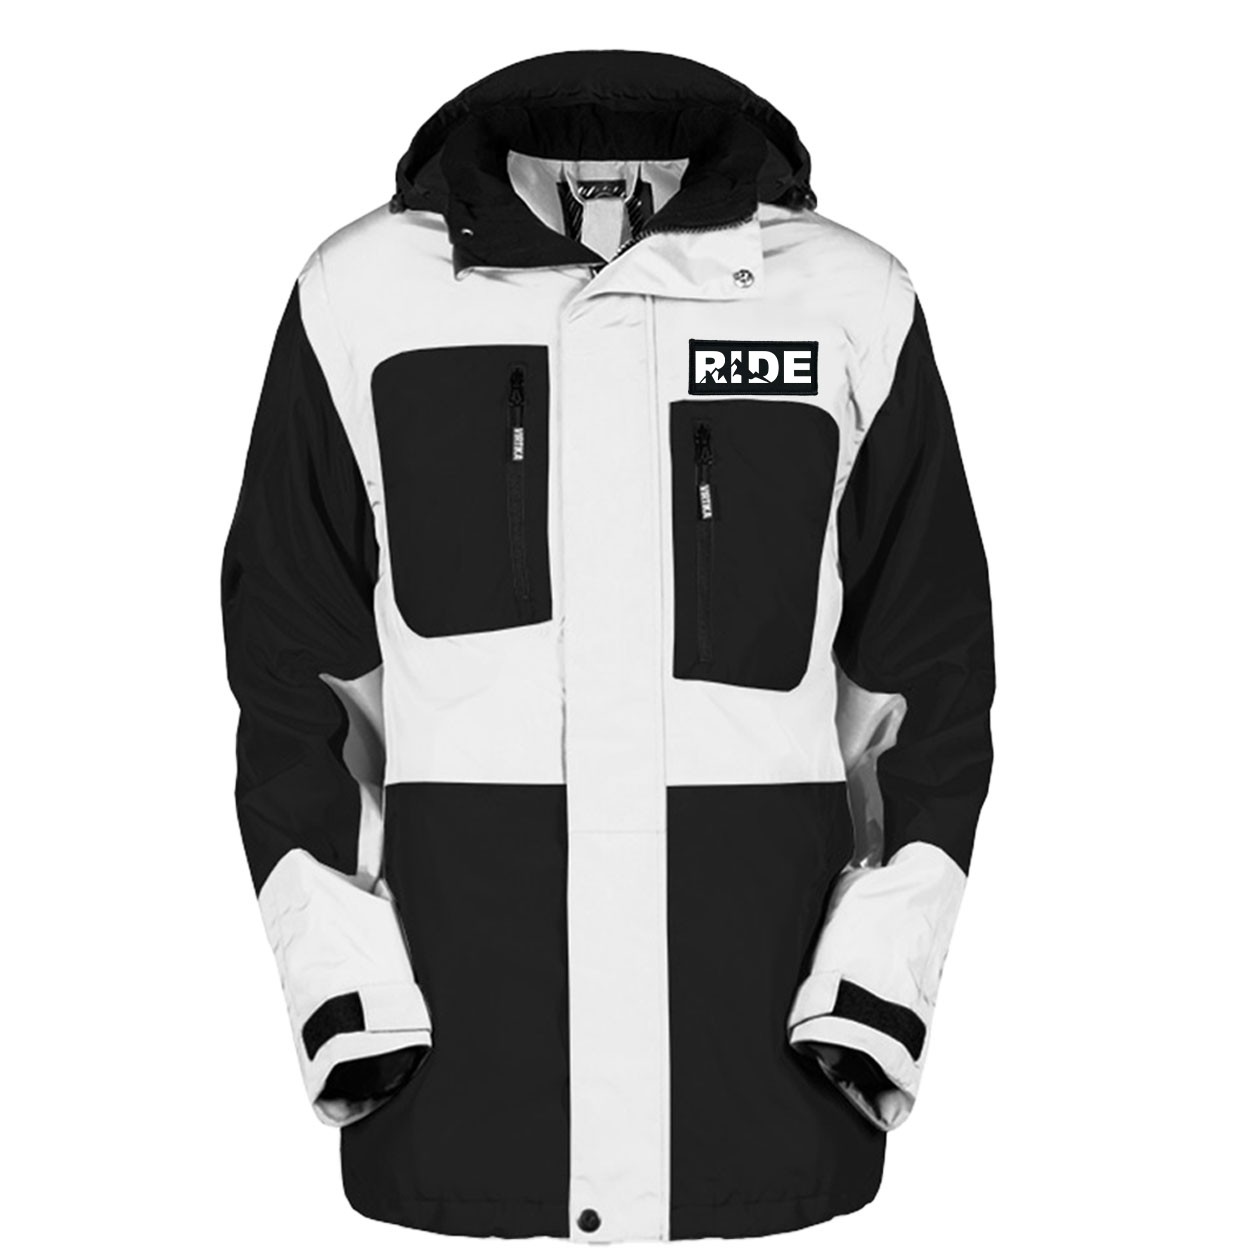 Ride Mountain Logo Pro Waterproof Breathable Winter Virtika Jacket Black/White (White Logo)